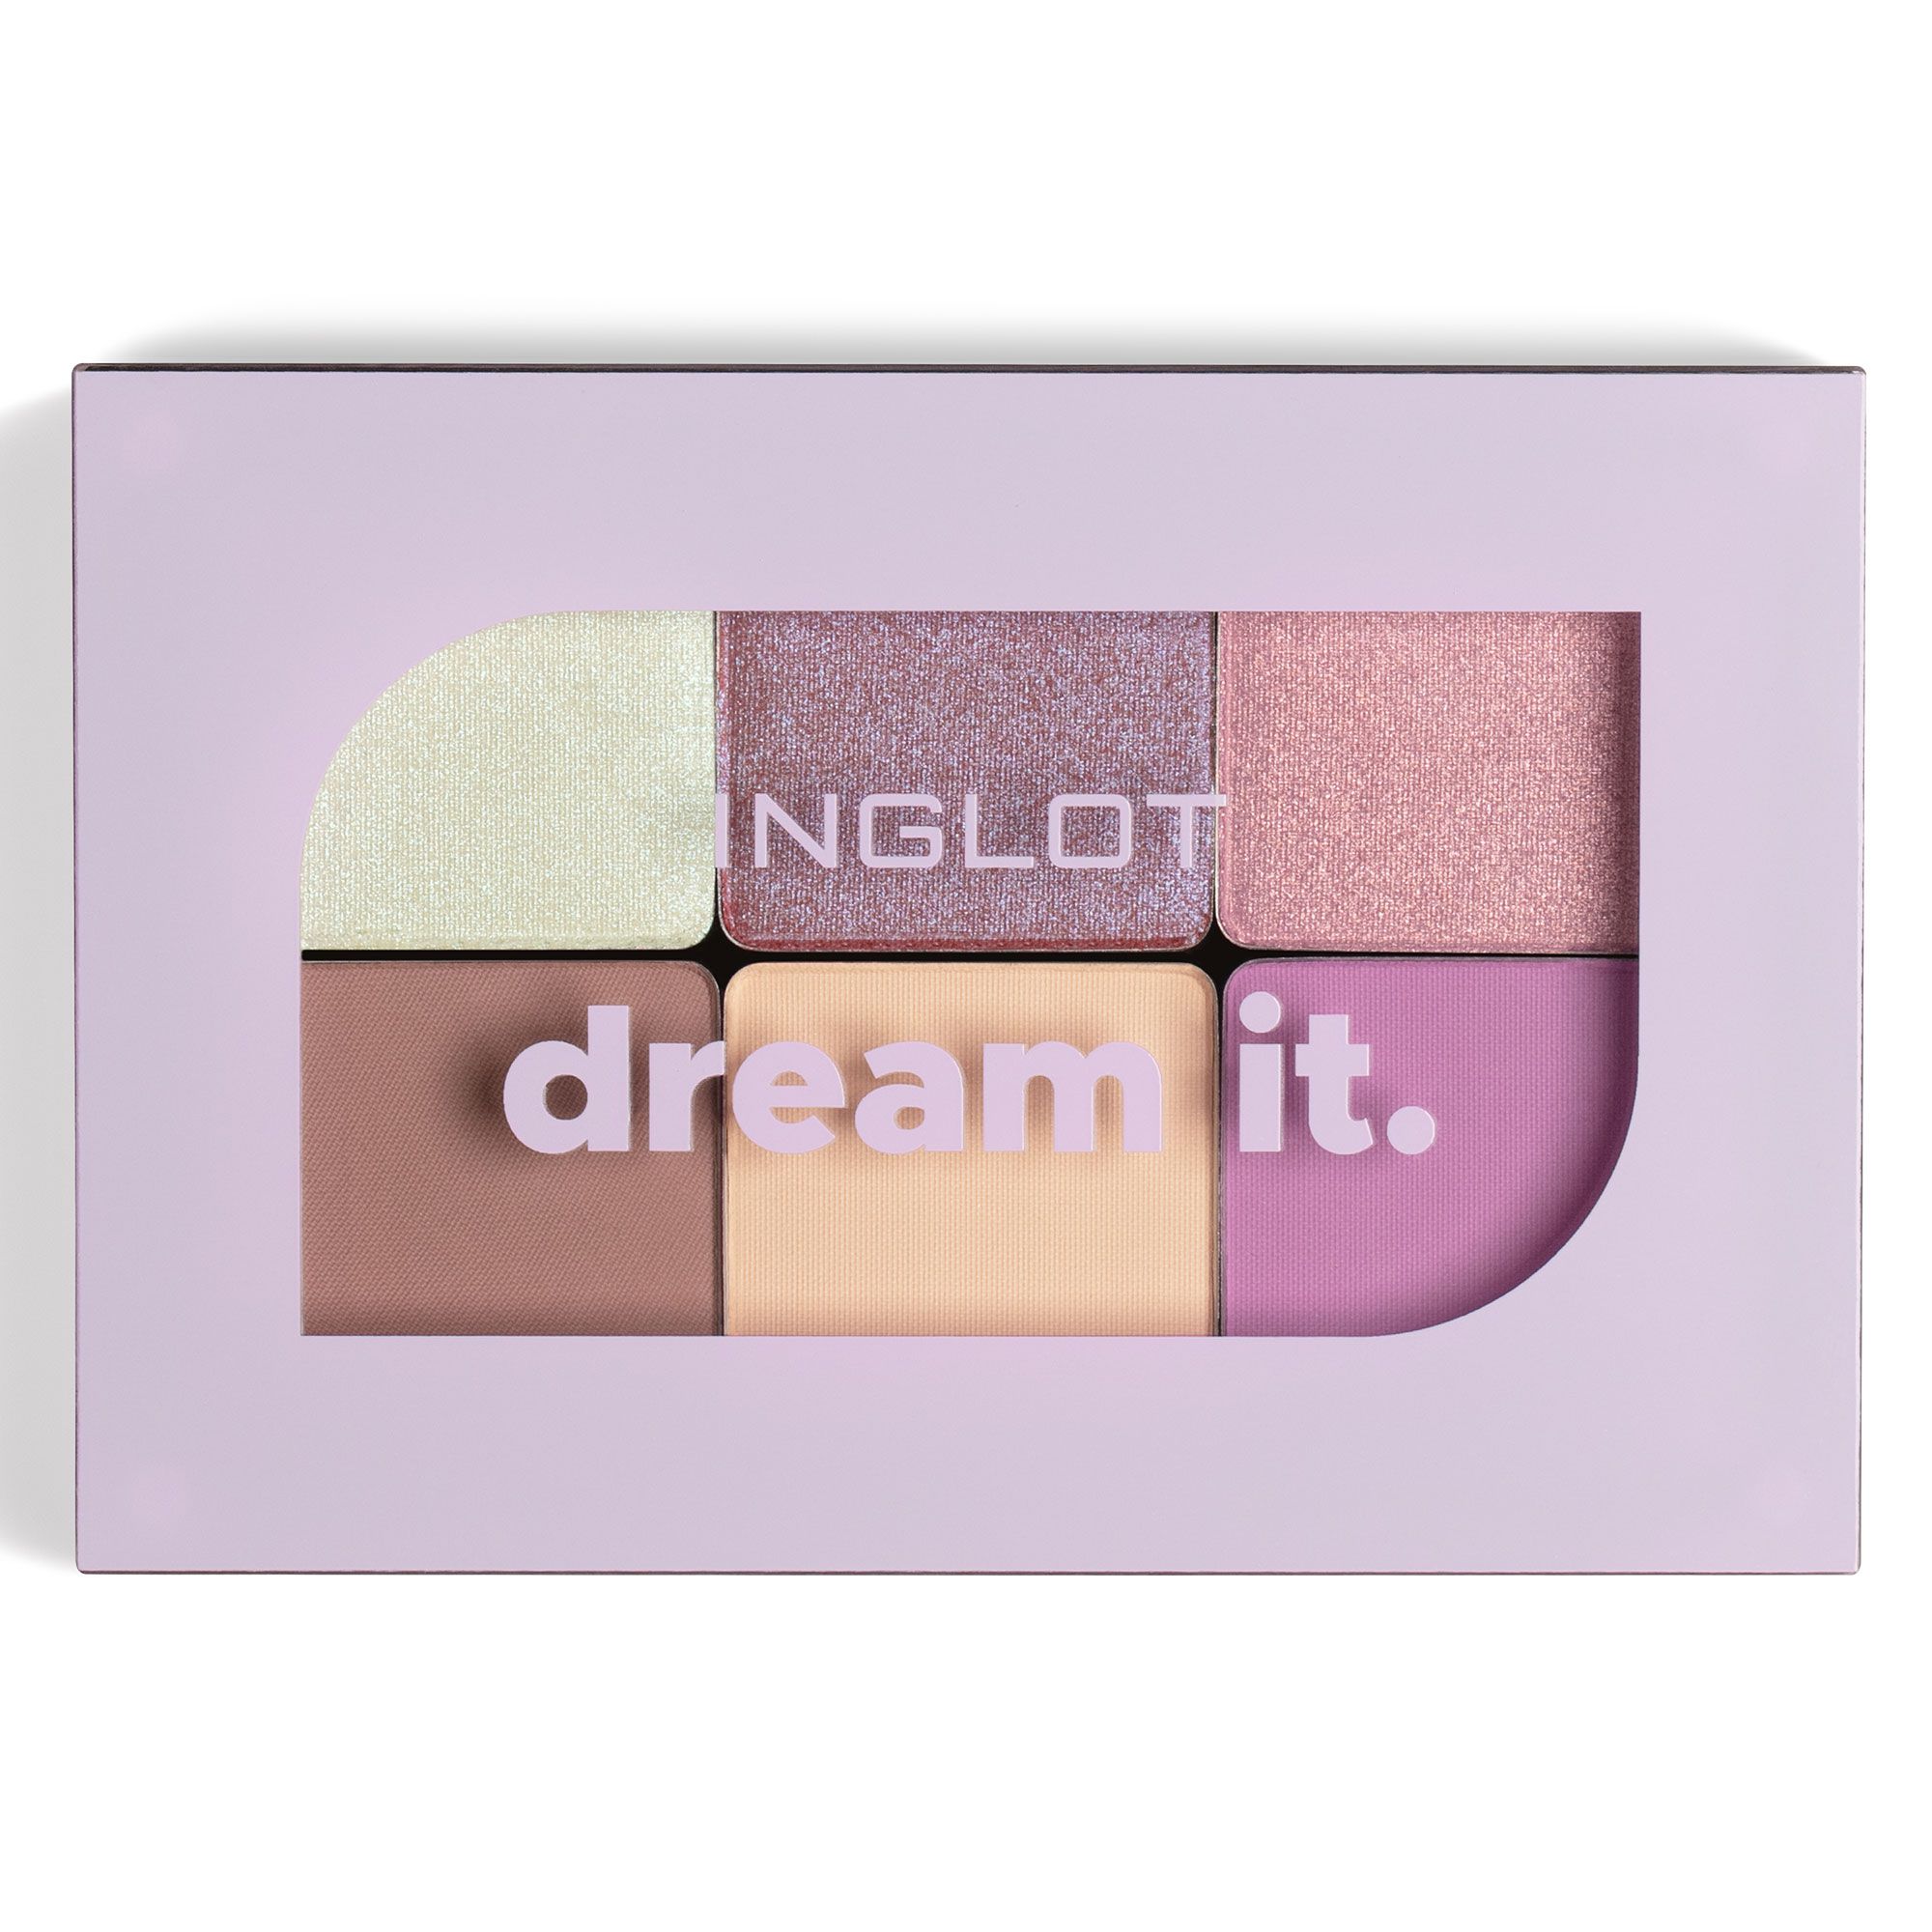 Freedom System Flexi Palette [6] Dream It. - make-up palette - Inglot Cosmetics